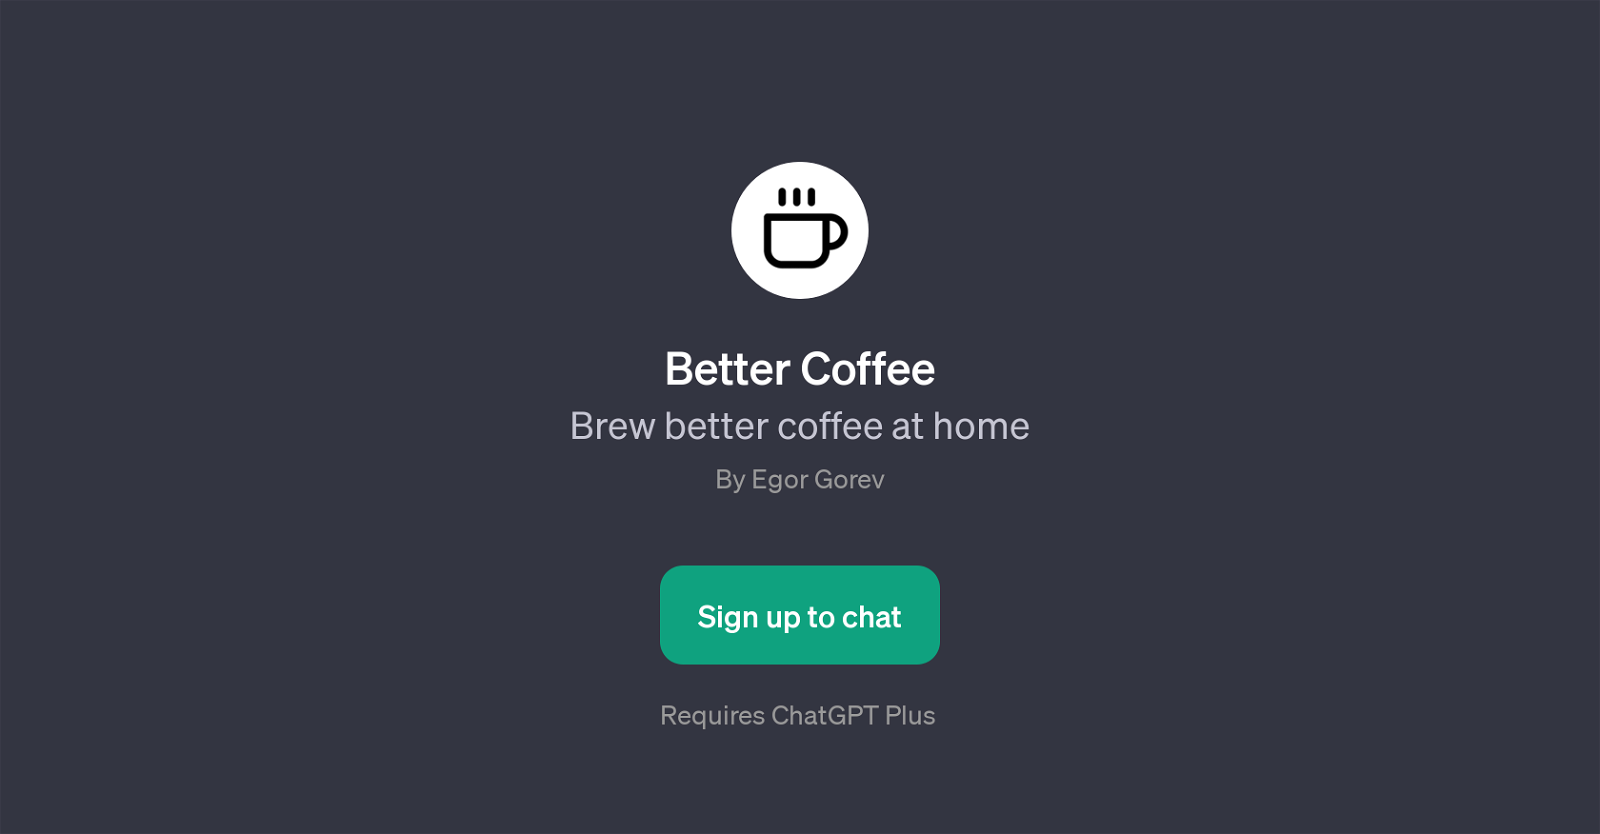 Better Coffee website